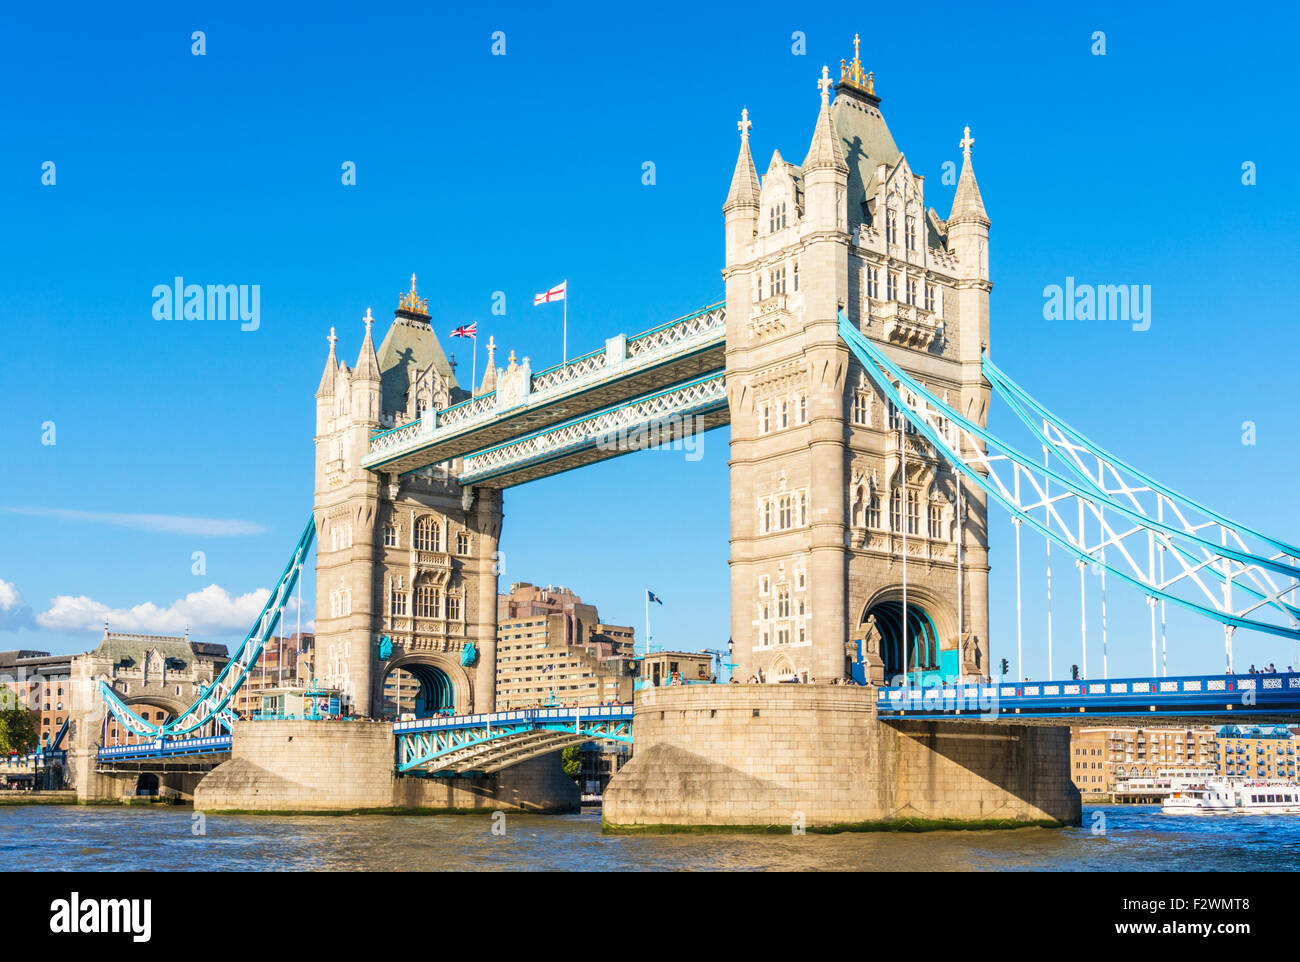 Tower Bridge and River Thames City of London England GB UK EU Europe Stock Photo